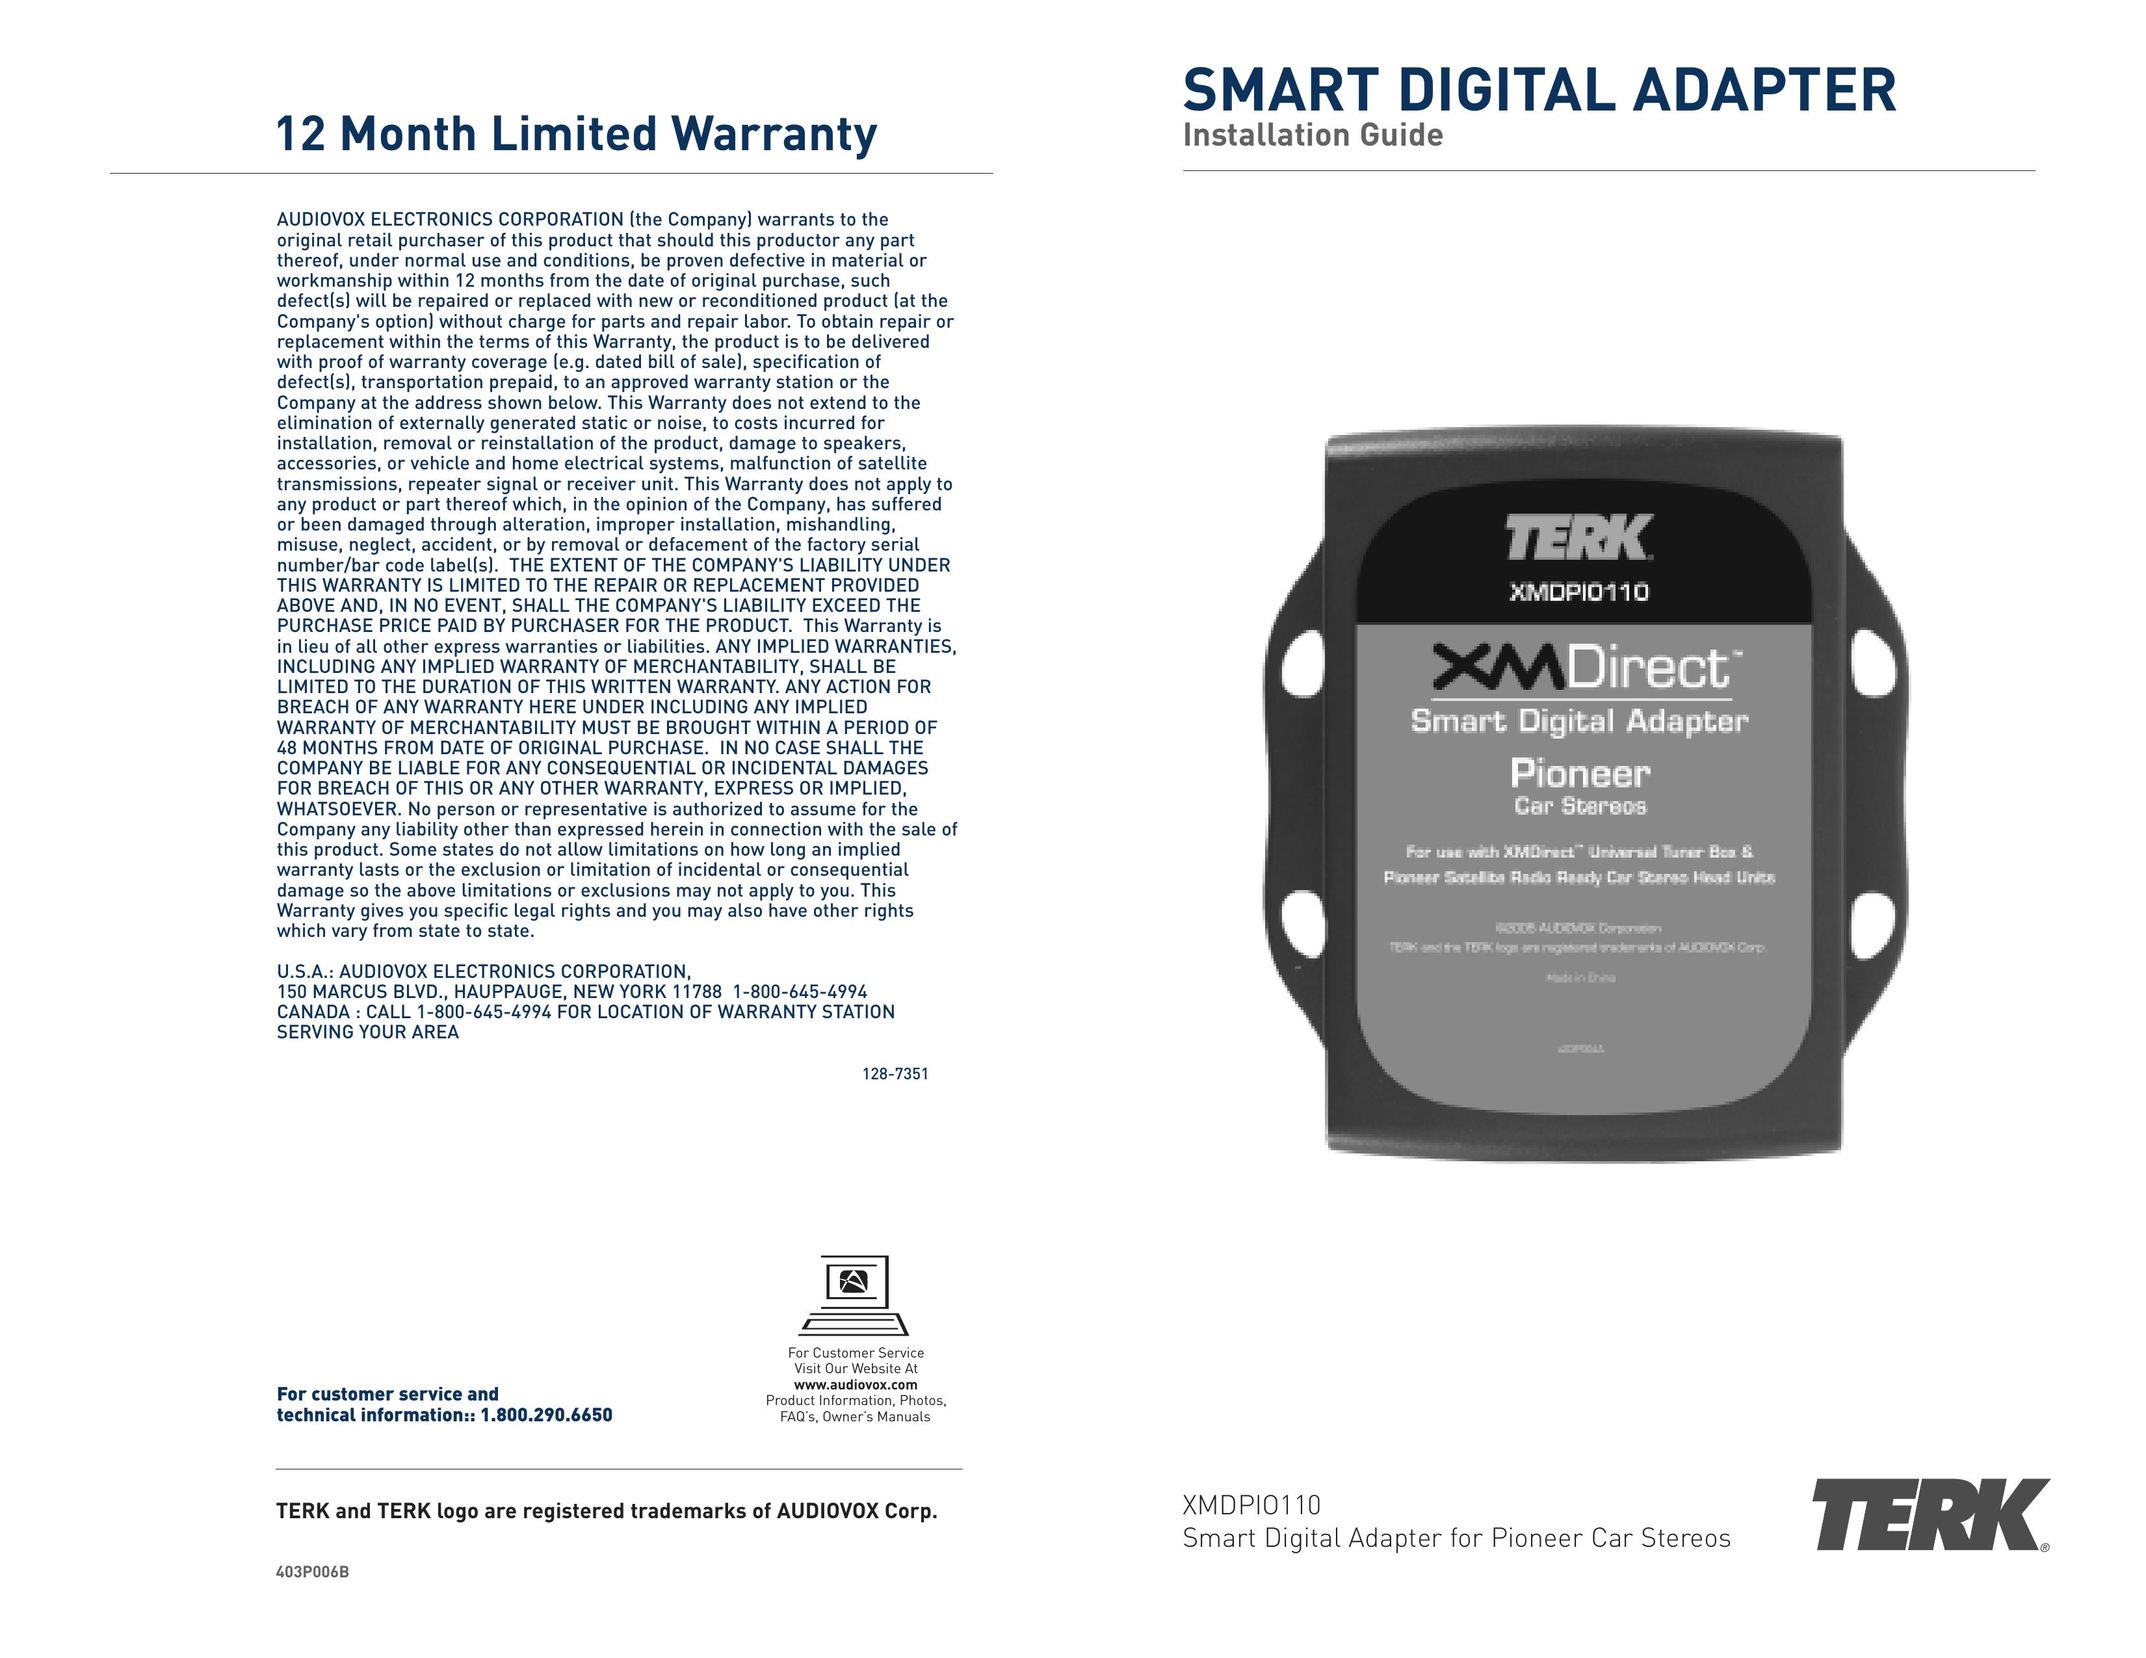 TERK Technologies XMDPIO110 Network Card User Manual